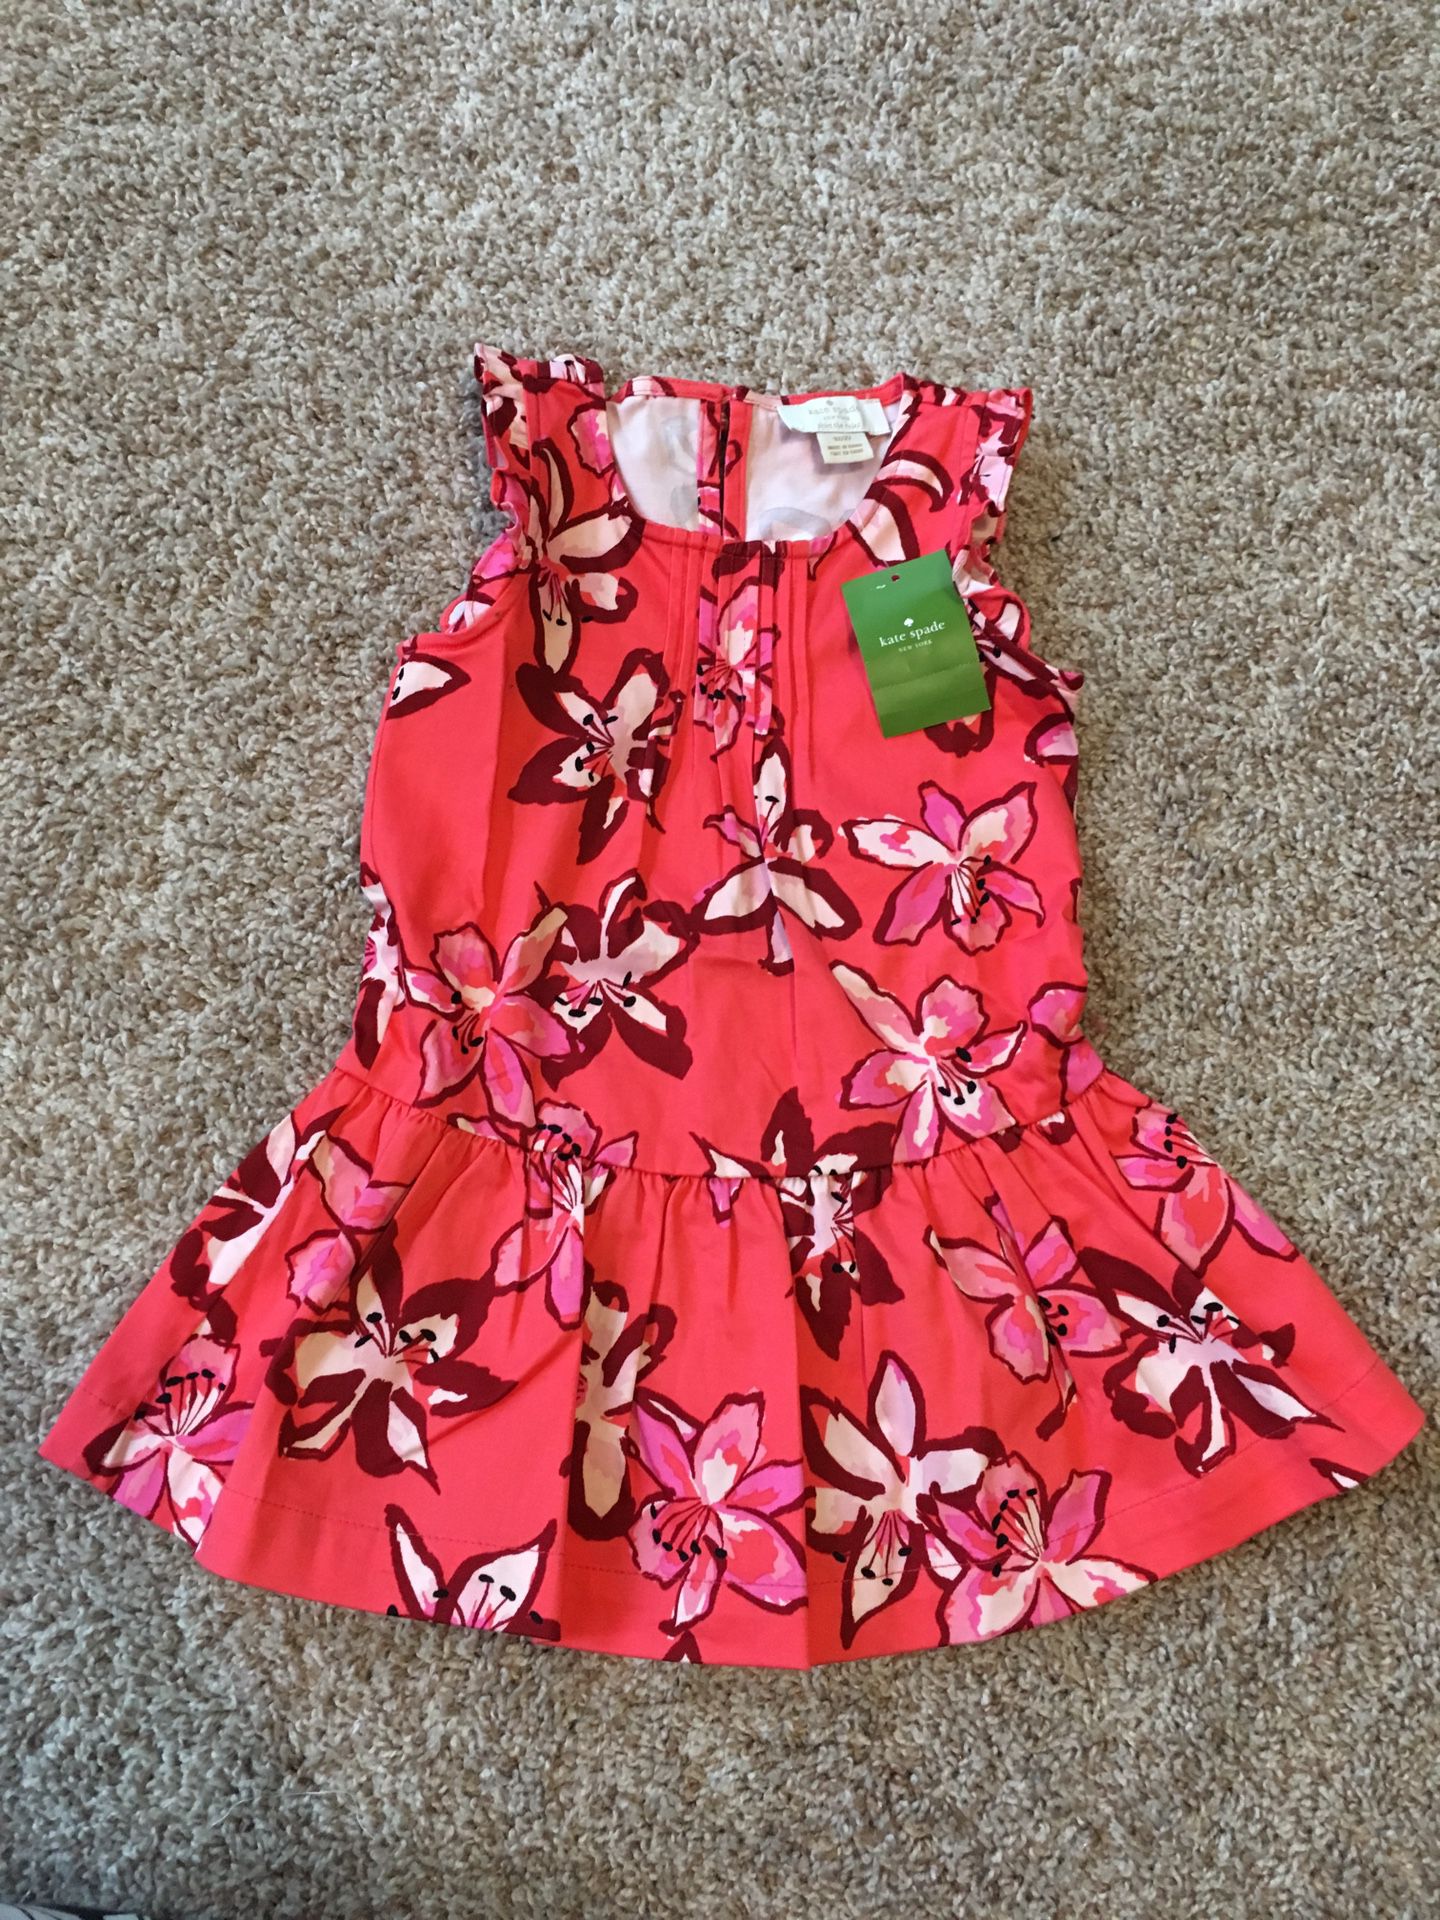 Kate Spade Toddler Easter Dress